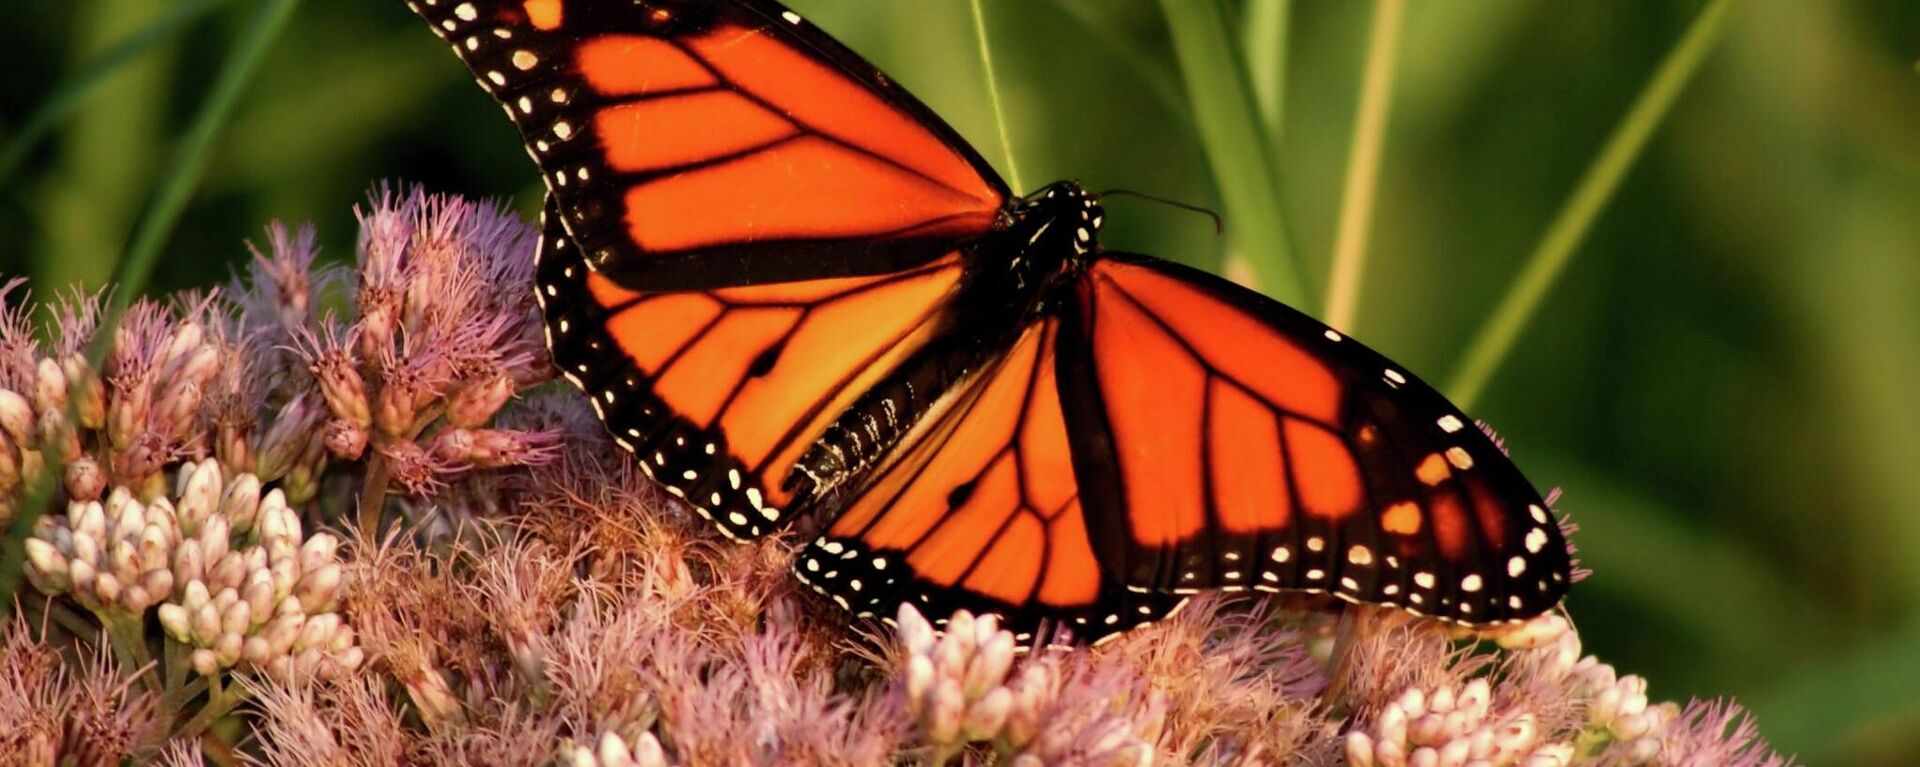 Una mariposa monarca - Sputnik Mundo, 1920, 25.11.2021